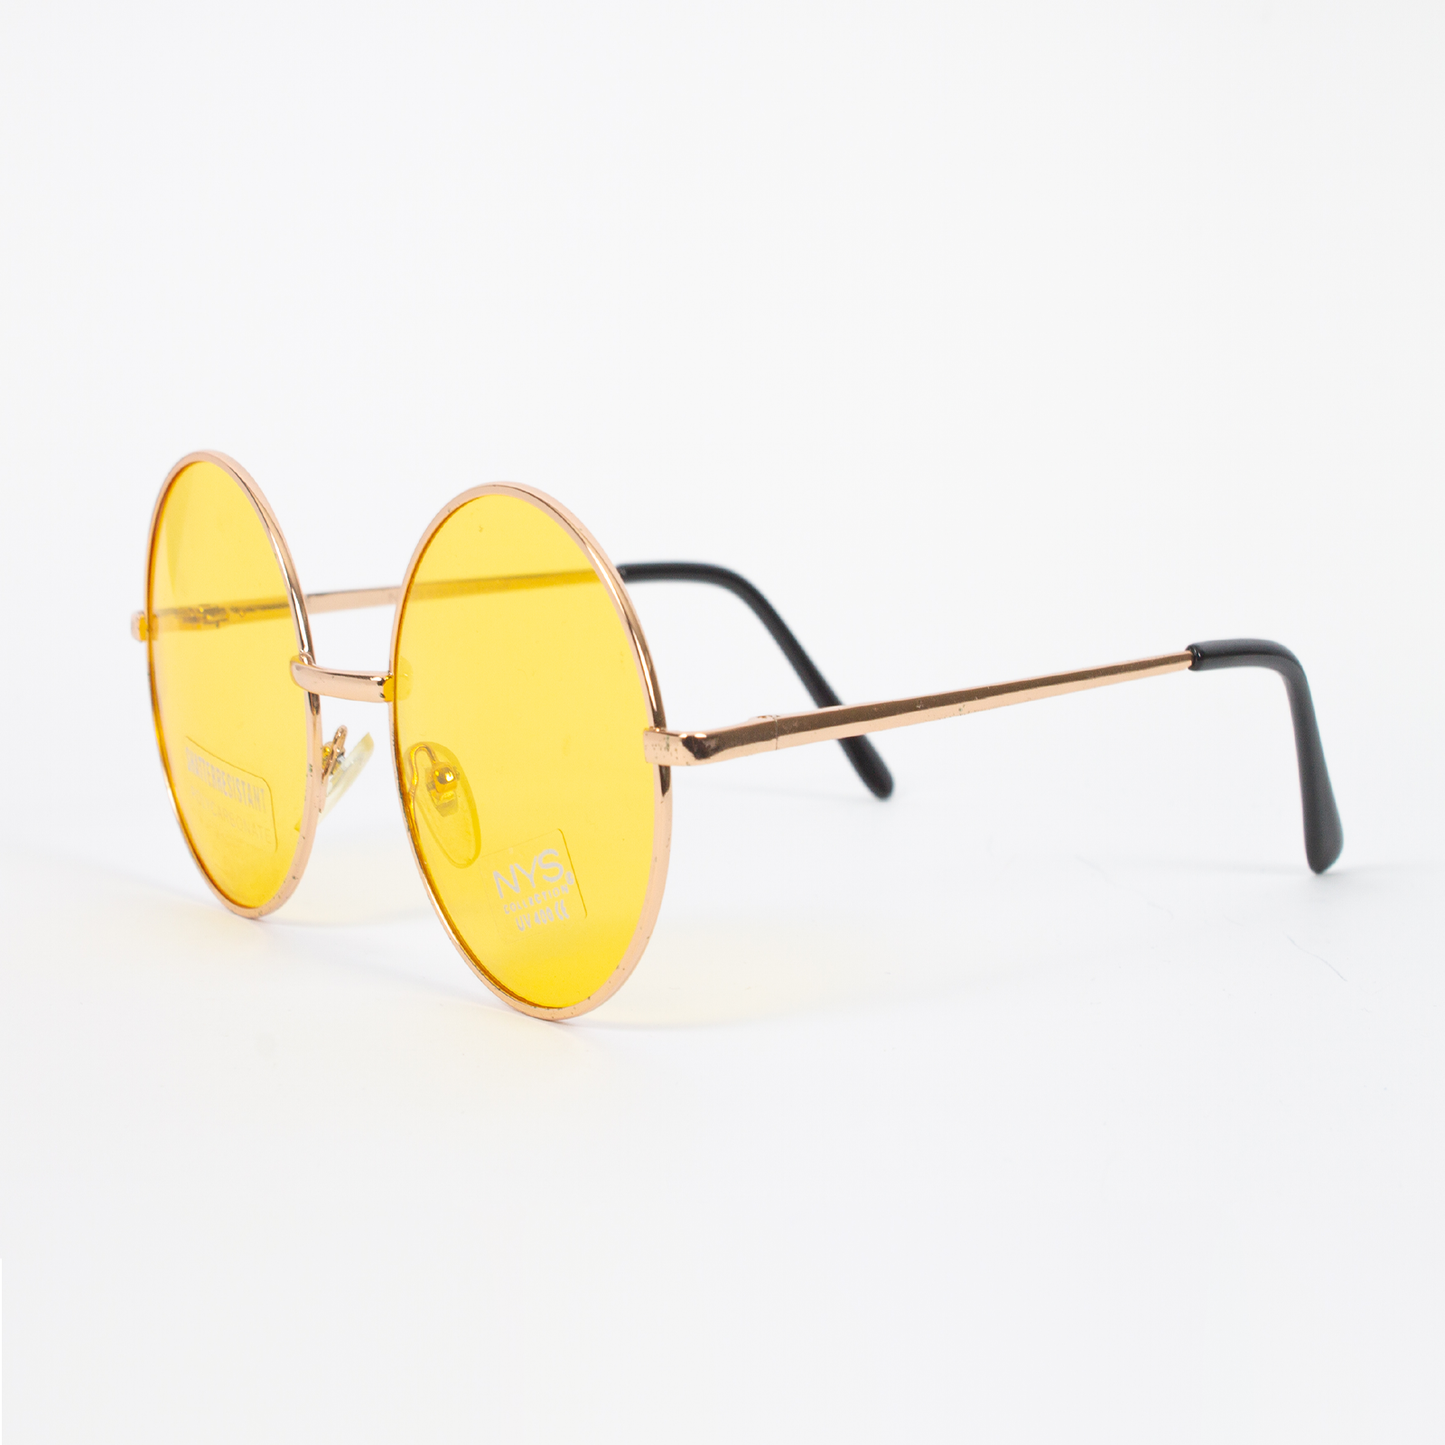 Freeman Street Round Sunglasses